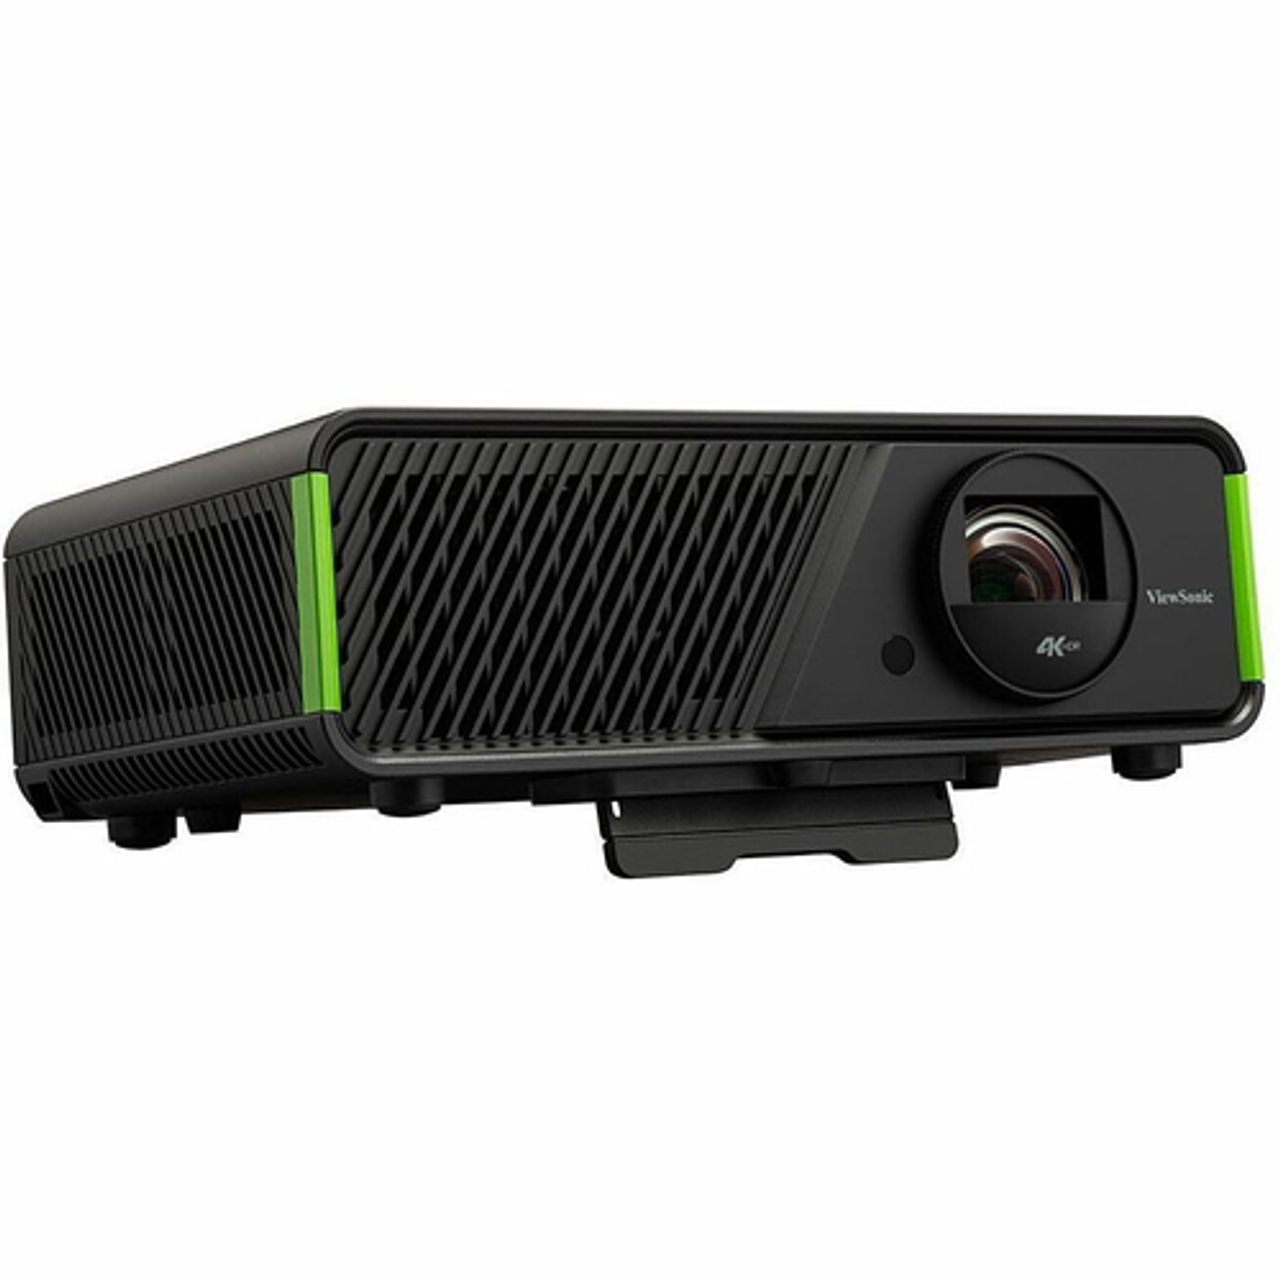 ViewSonic - 4K HDR High Brightness Short Throw Smart LED Home Projector - Black